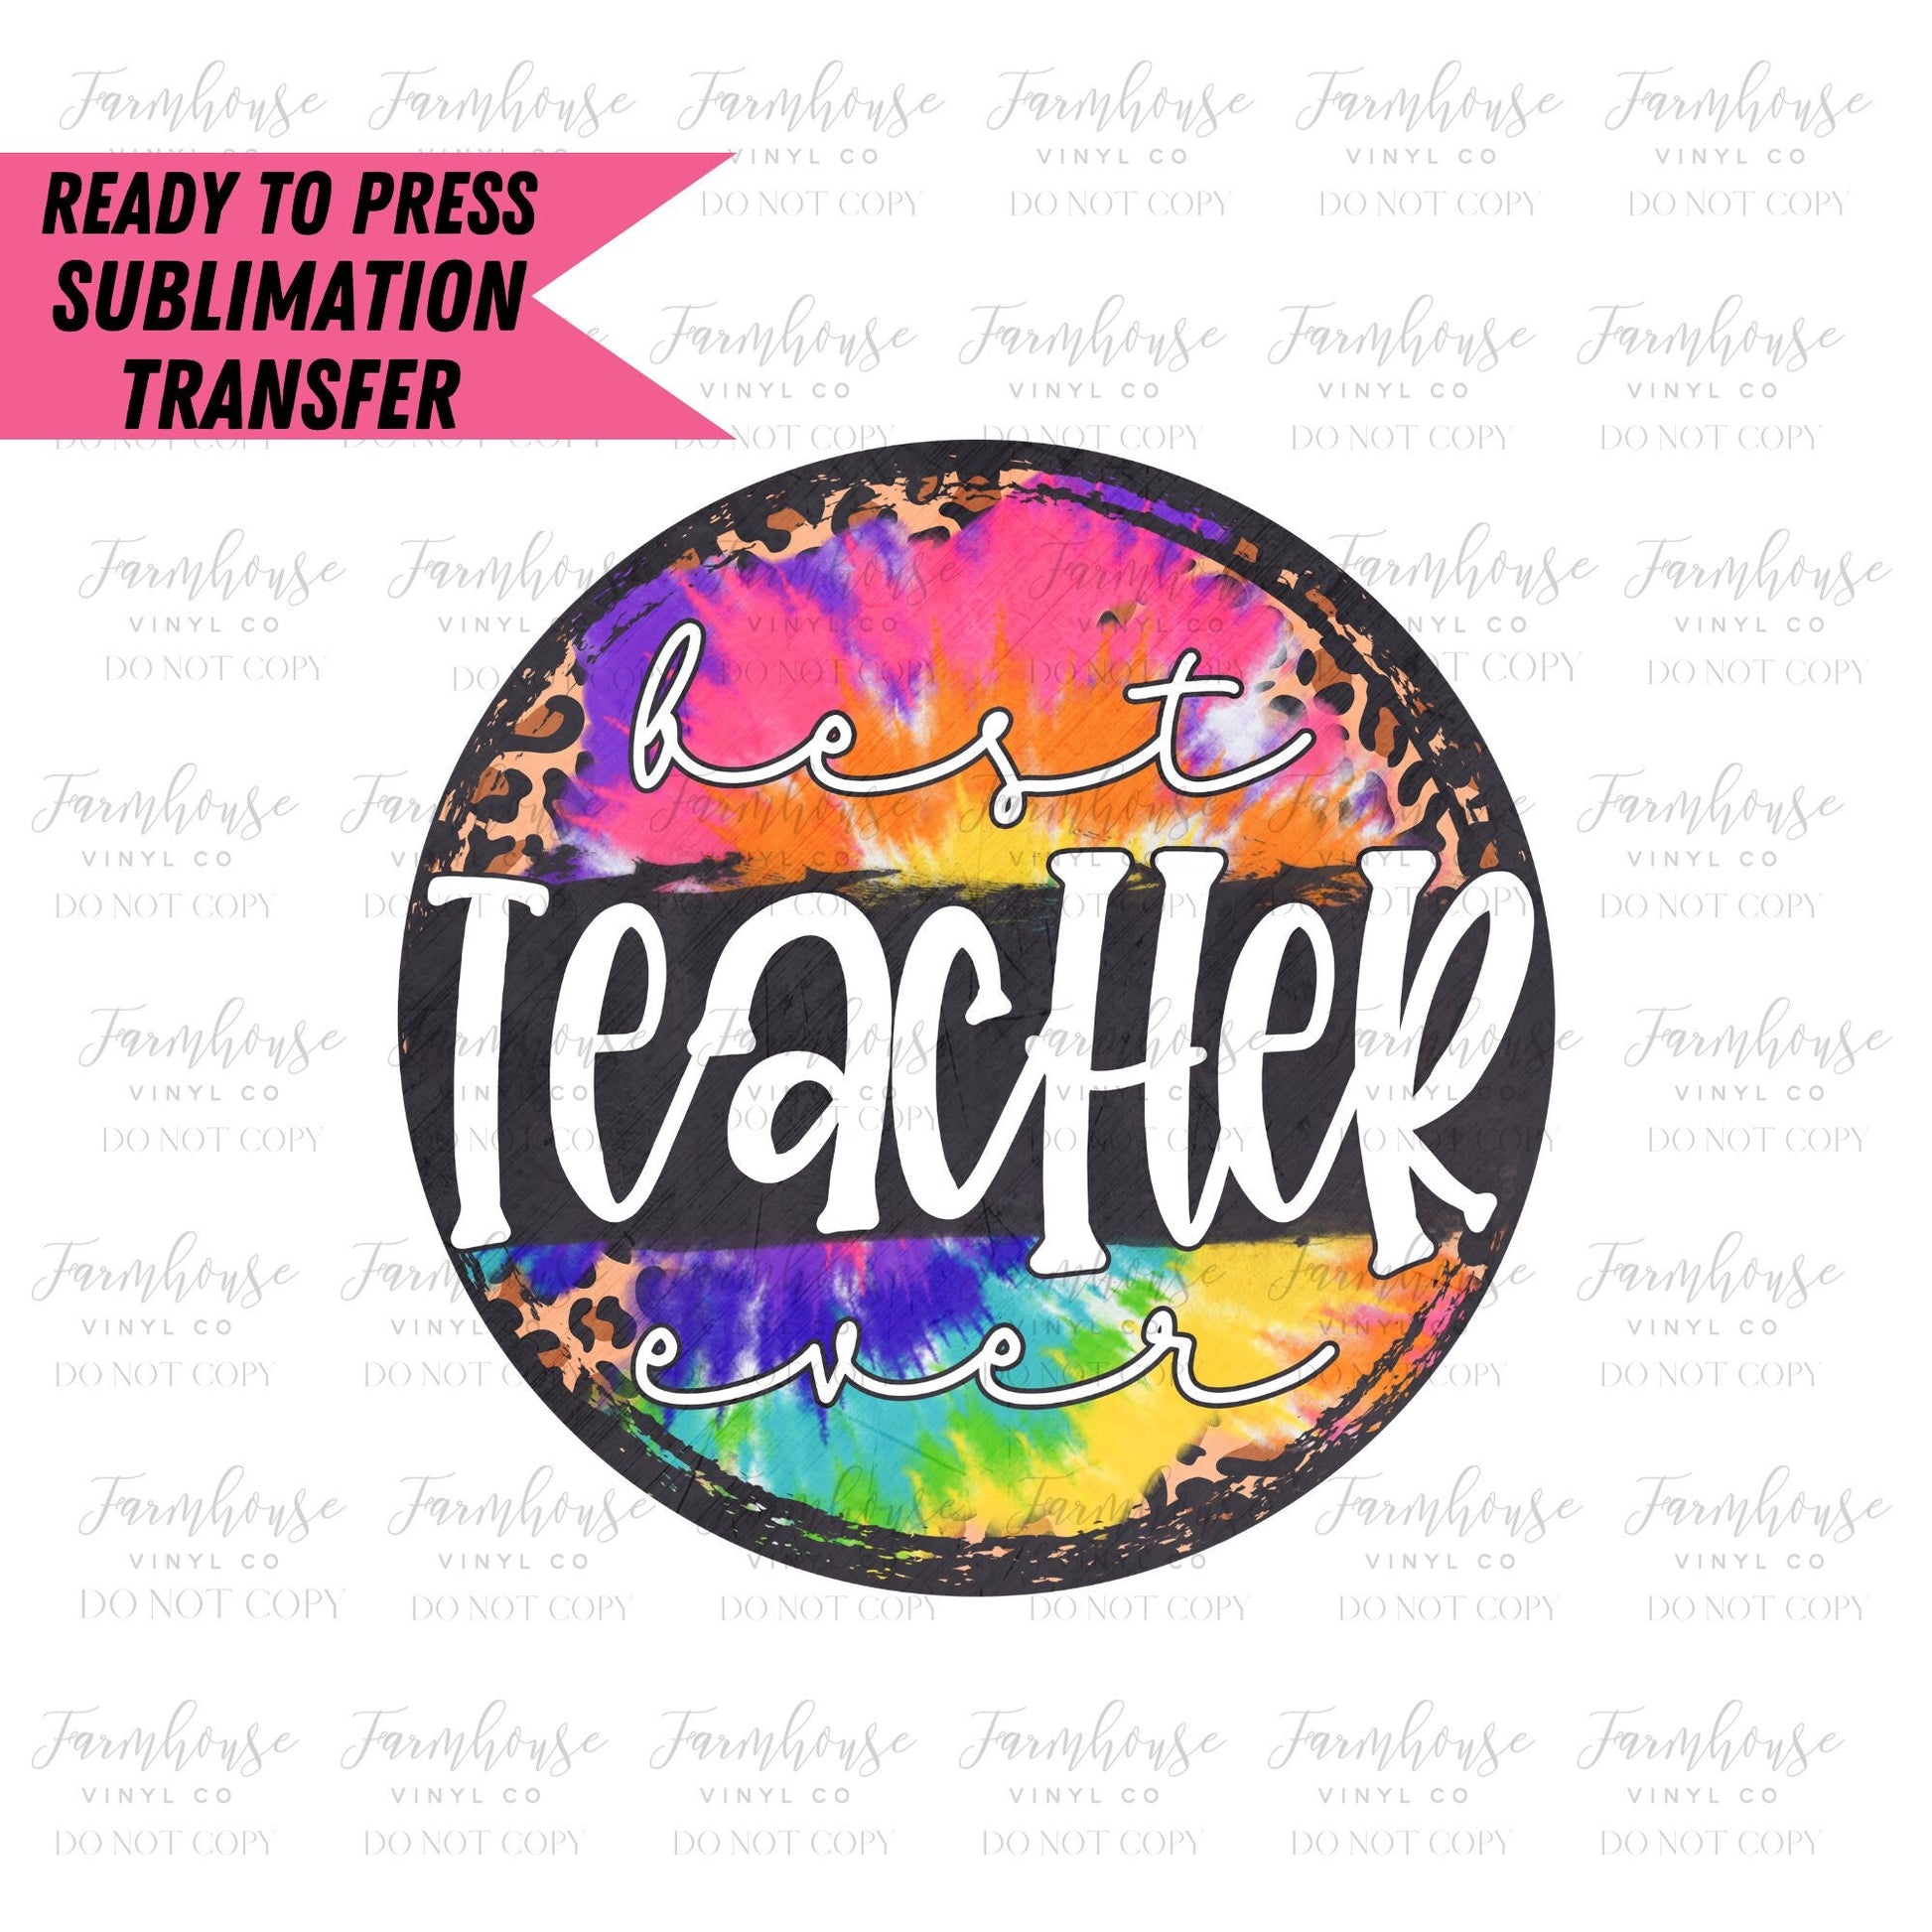 Best Teacher Ever Tie Dye, Ready to Press Sublimation Transfer, Sublimation Transfers, Heat Transfer, Ready to Press, Teacher, School Design - Farmhouse Vinyl Co